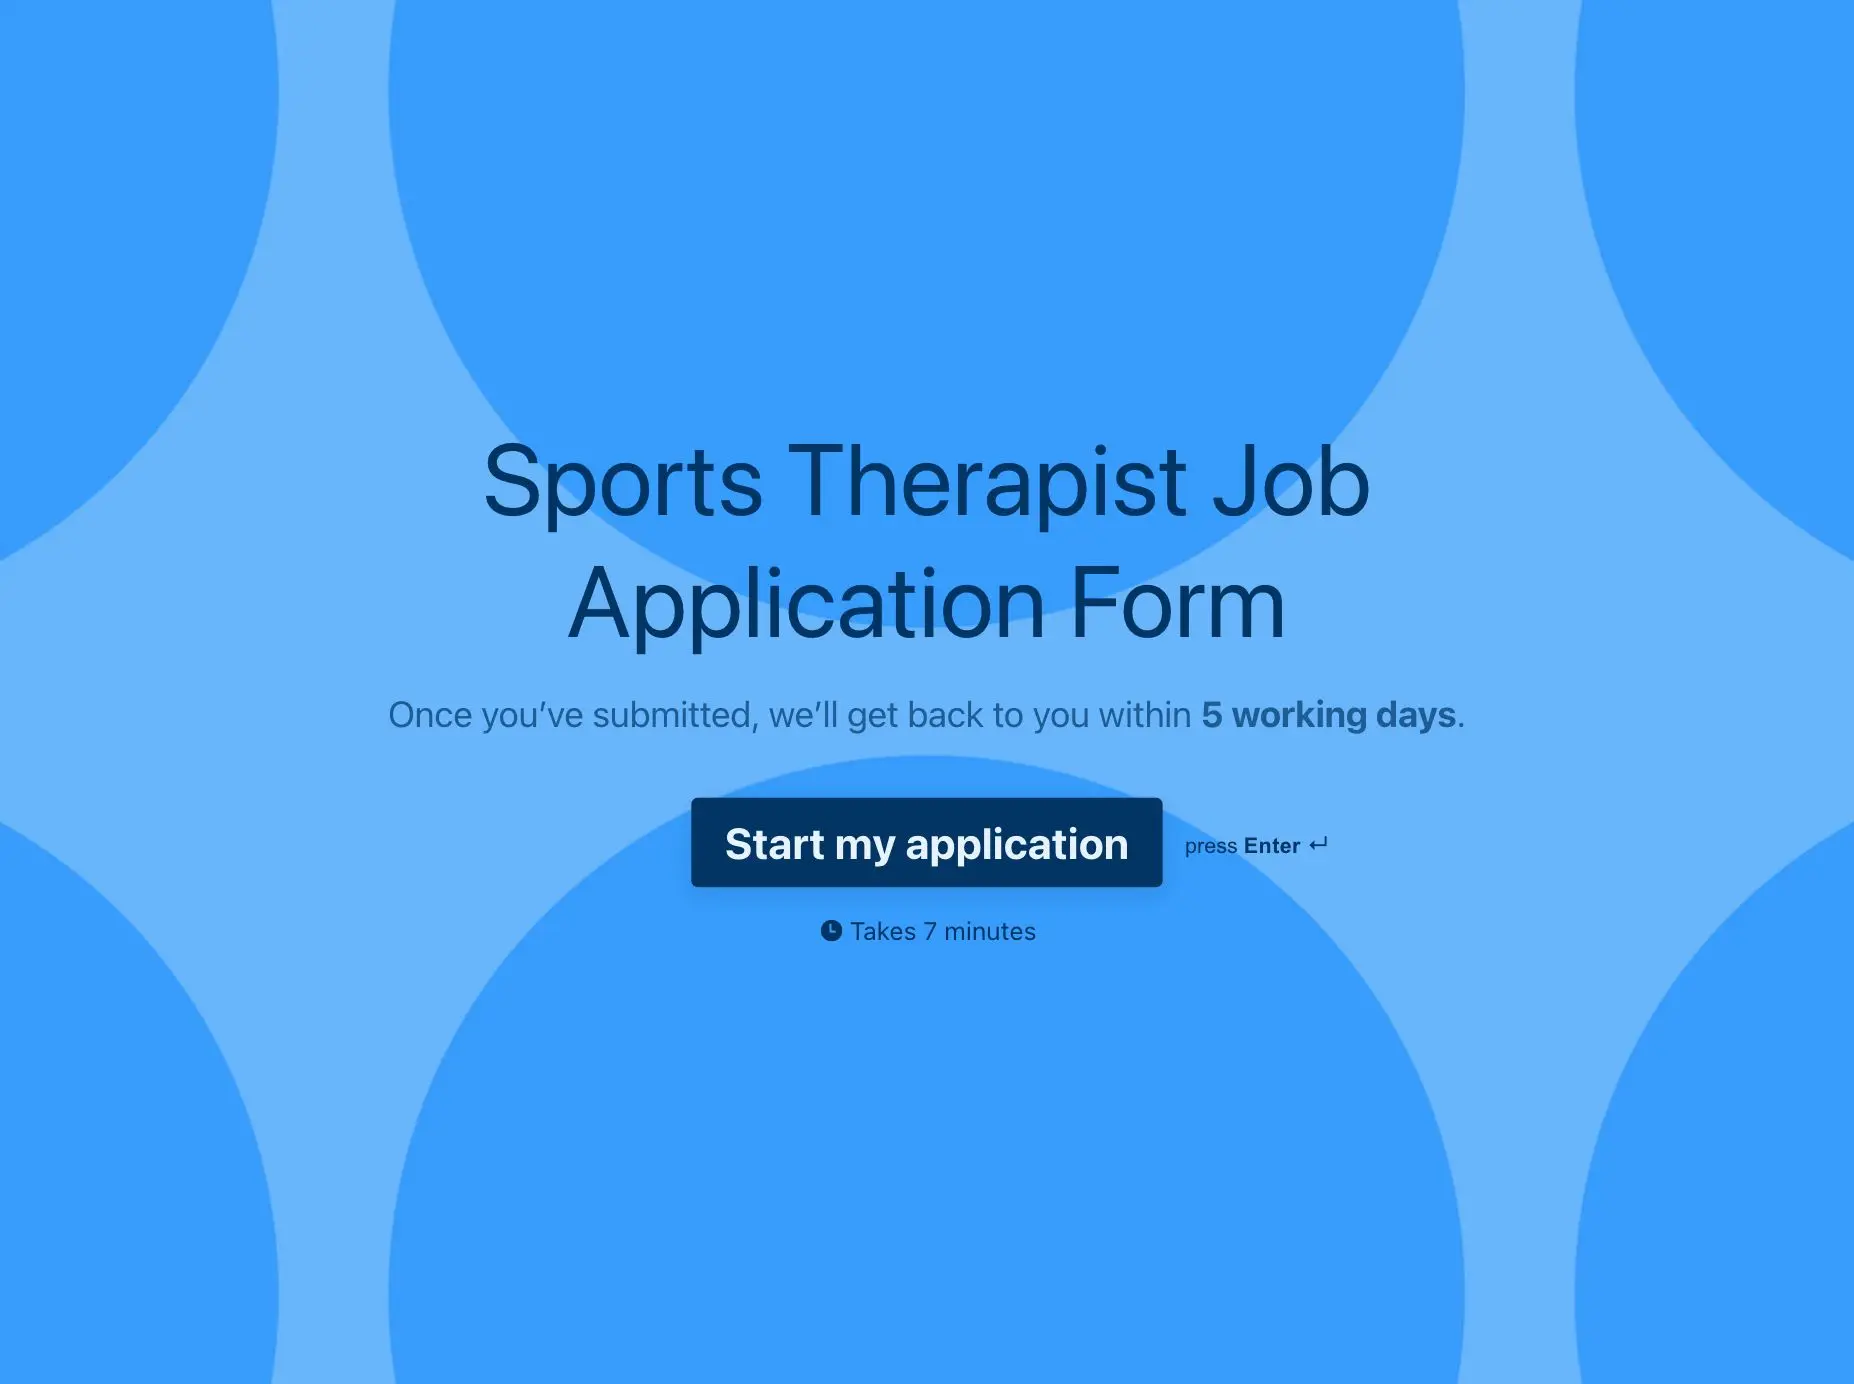 Sports Therapist Job Application Form Template Hero